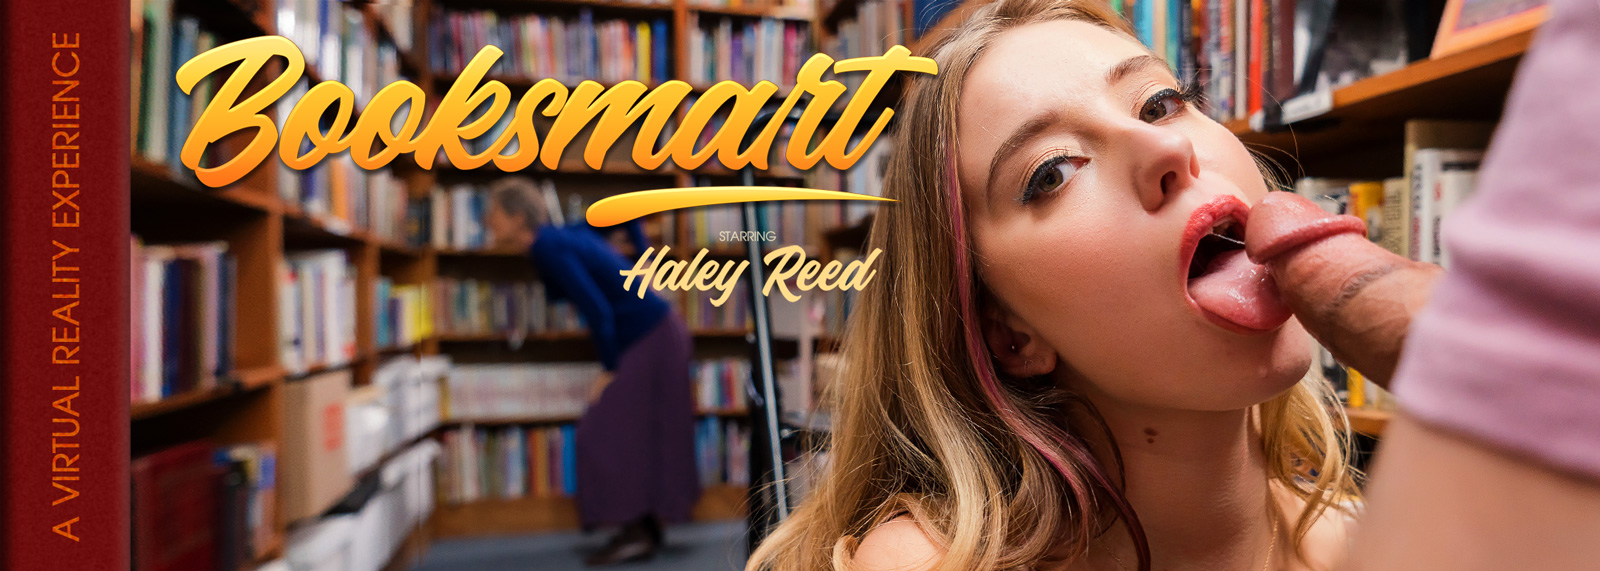 Booksmart - VR Porn Video, Starring: Haley Reed